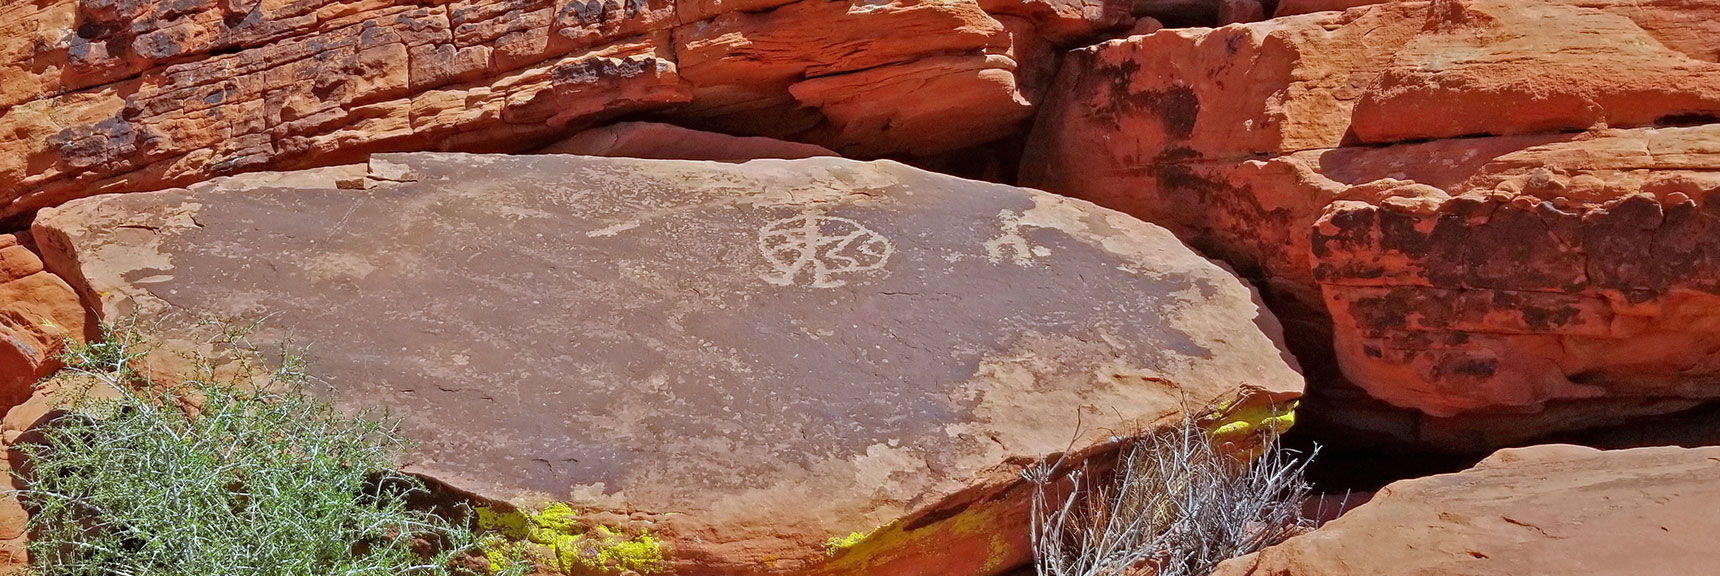 More Modern Graffiti Petroglyph Attempts | Little Red Rock Las Vegas, Nevada, Near La Madre Mountains Wilderness